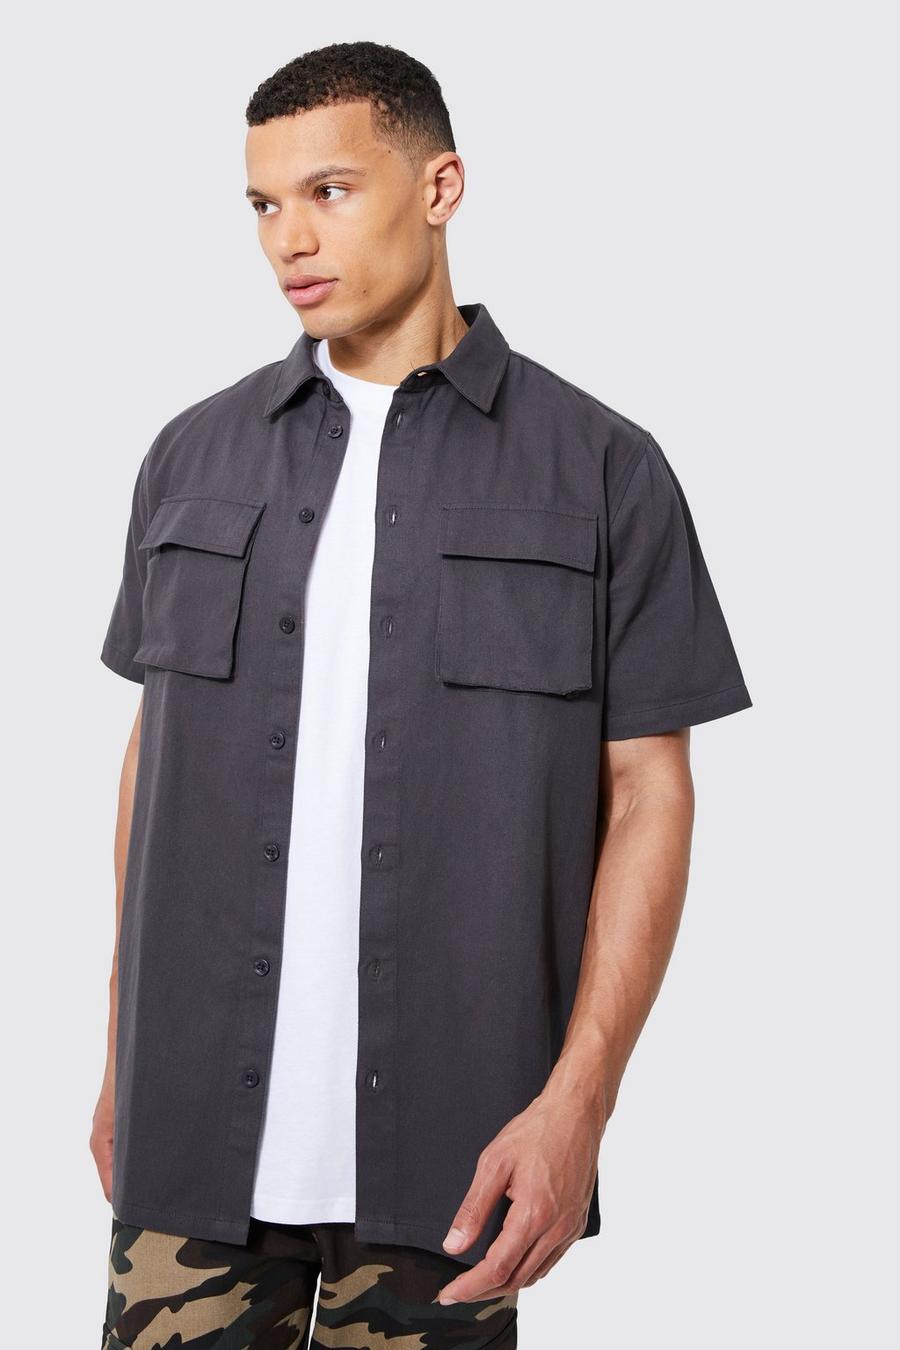 Charcoal grey Tall Short Sleeve Overshirt Utility Shirt